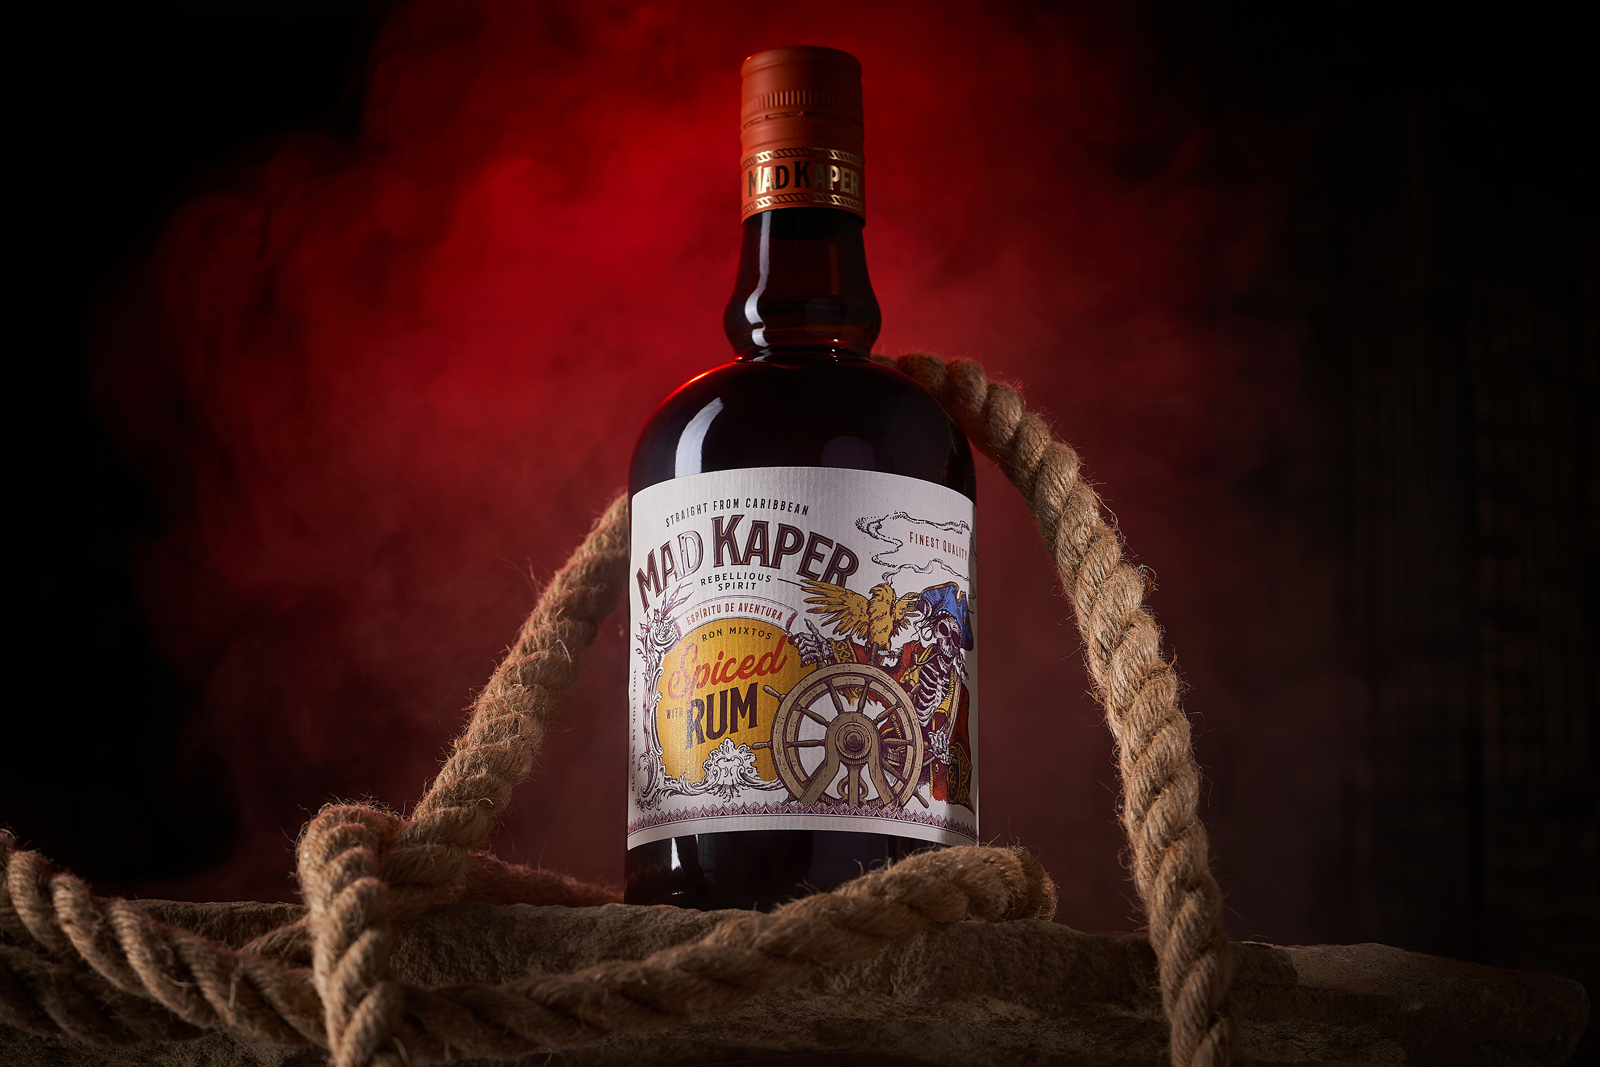 Mad Kaper Rum Packaging Design by 43oz.com Design Studio